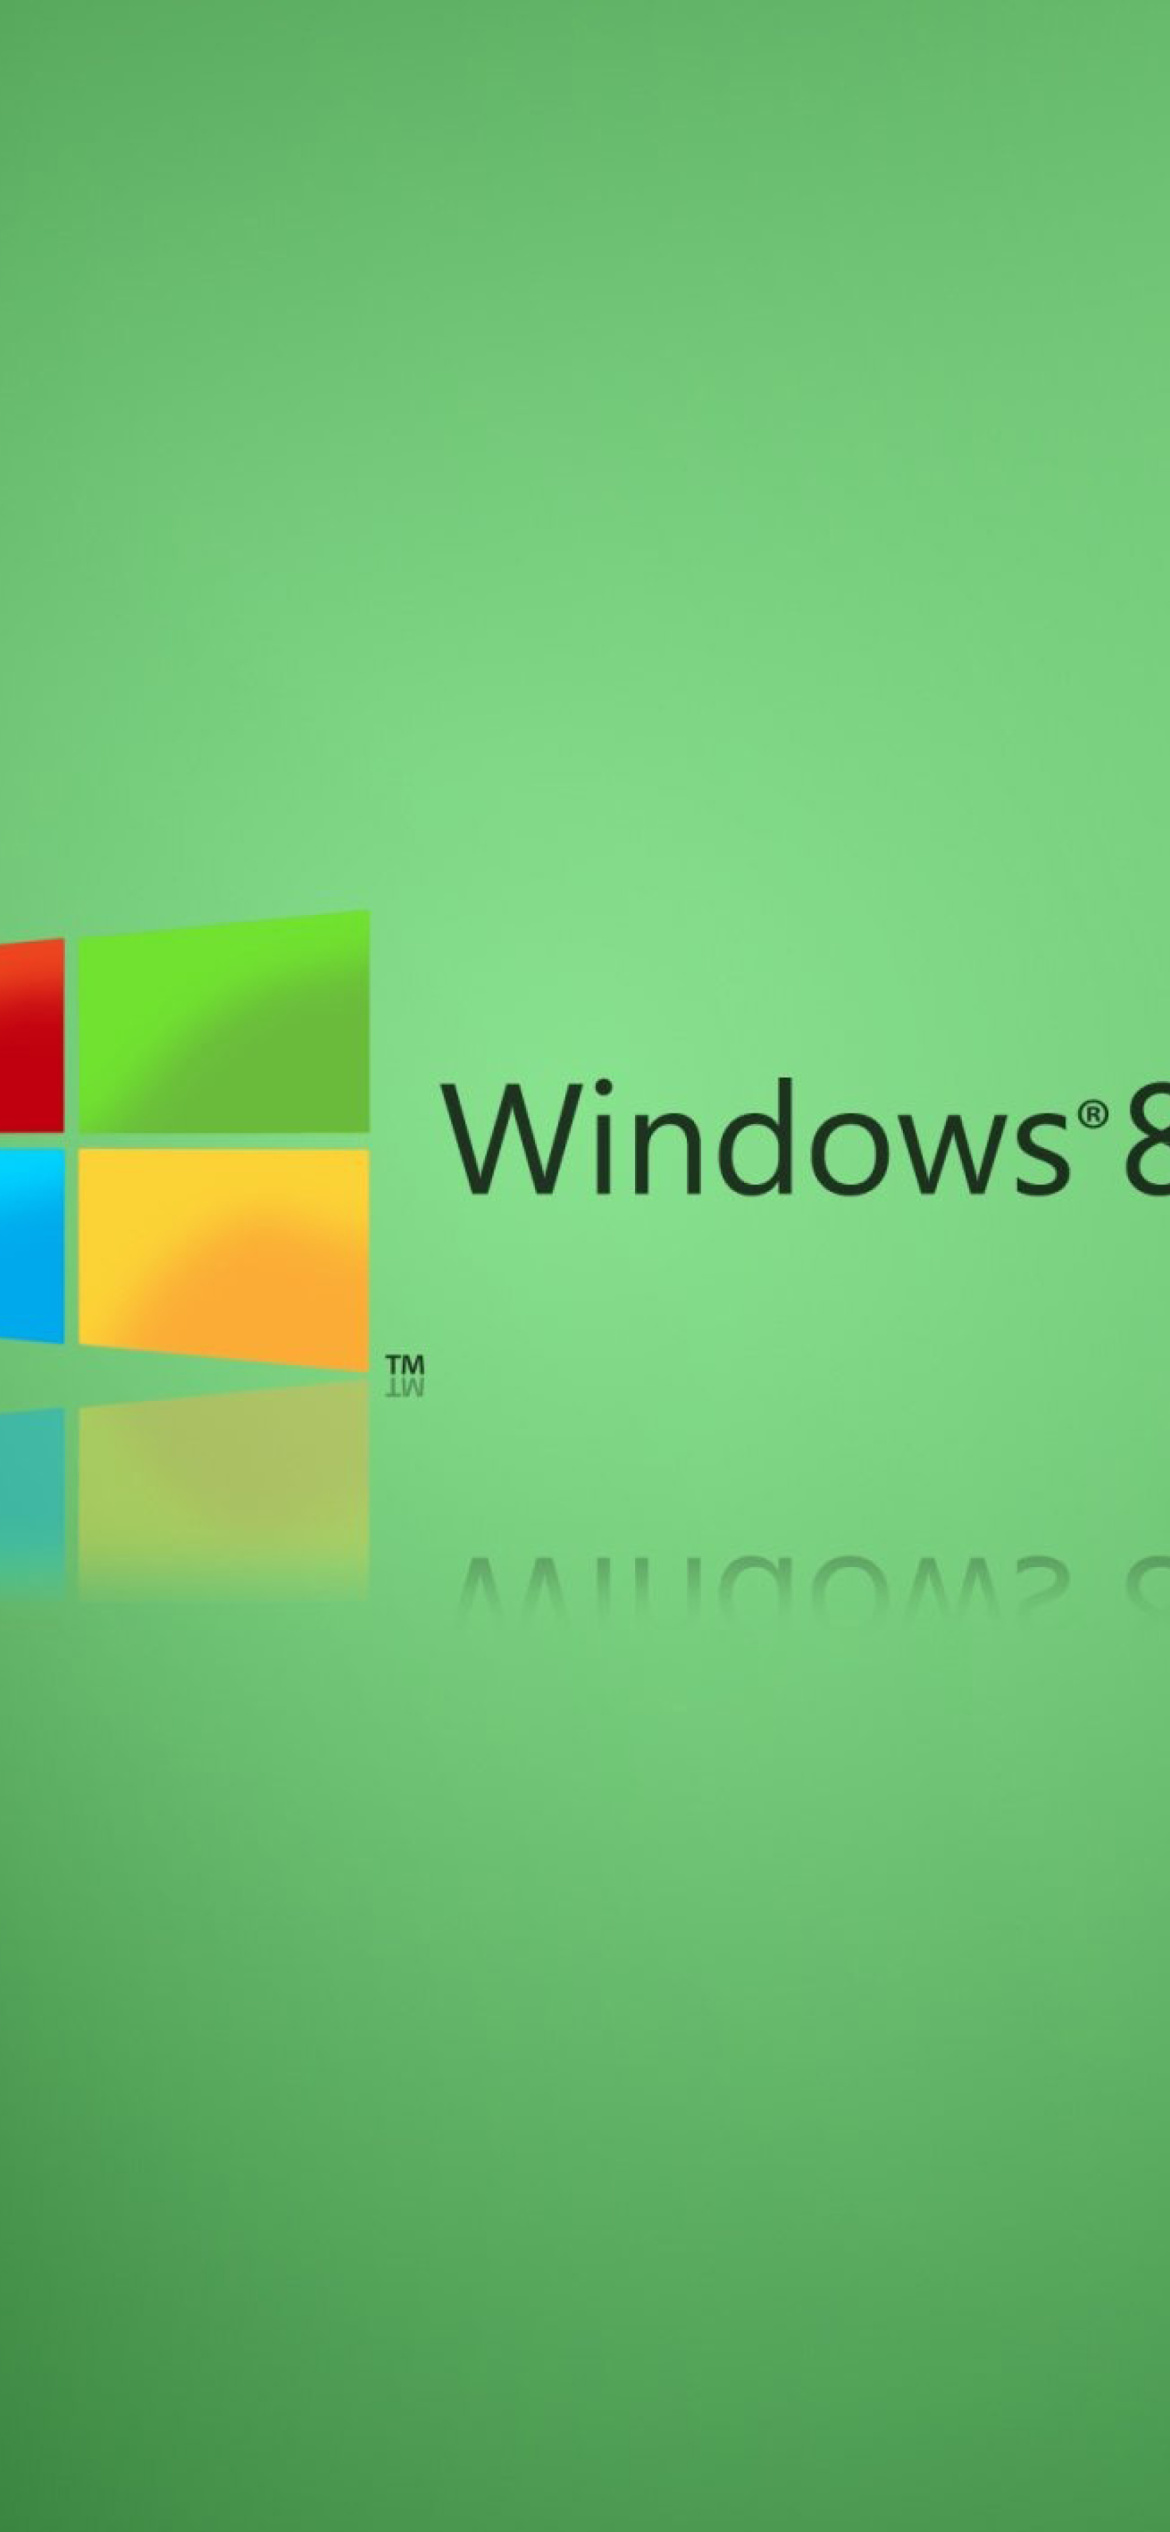 Windows 8 wallpaper 1170x2532